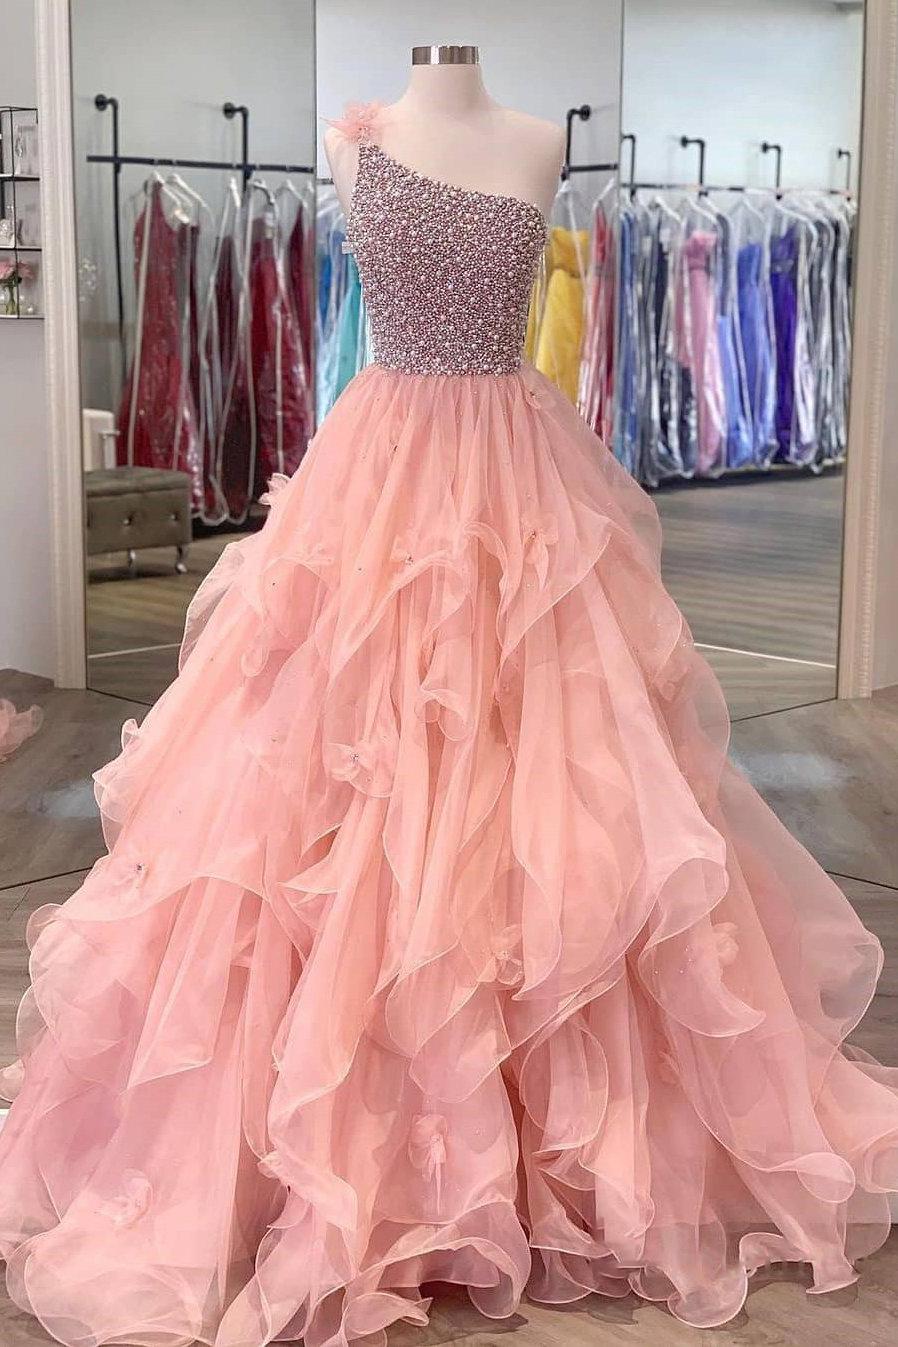 peach colored prom dresses